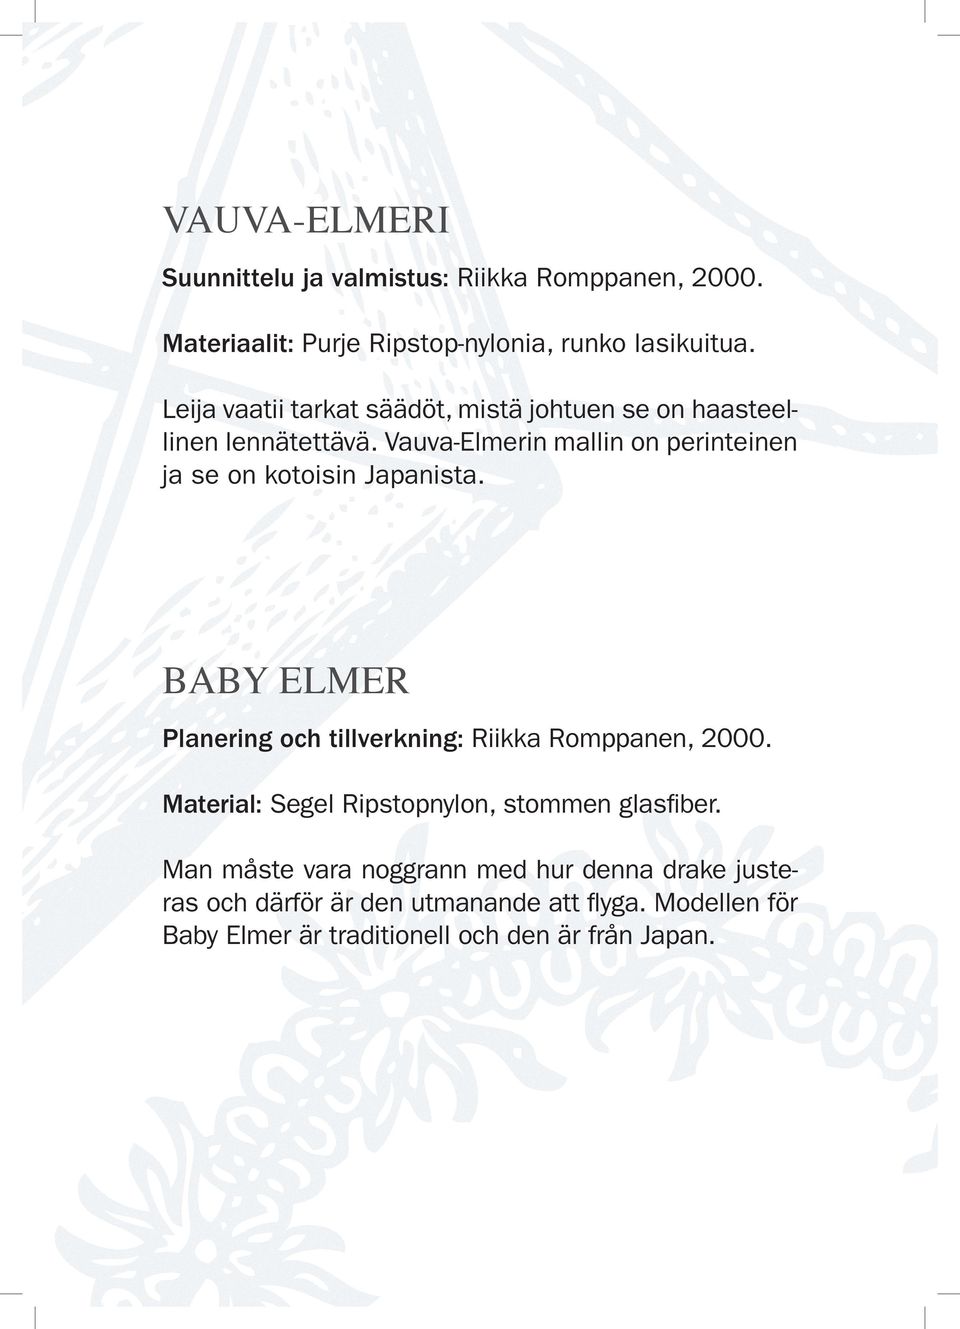 Vauva-Elmerin mallin on perinteinen ja se on kotoisin Japanista. BABY ELMER Planering och tillverkning: Riikka Romppanen, 2000.